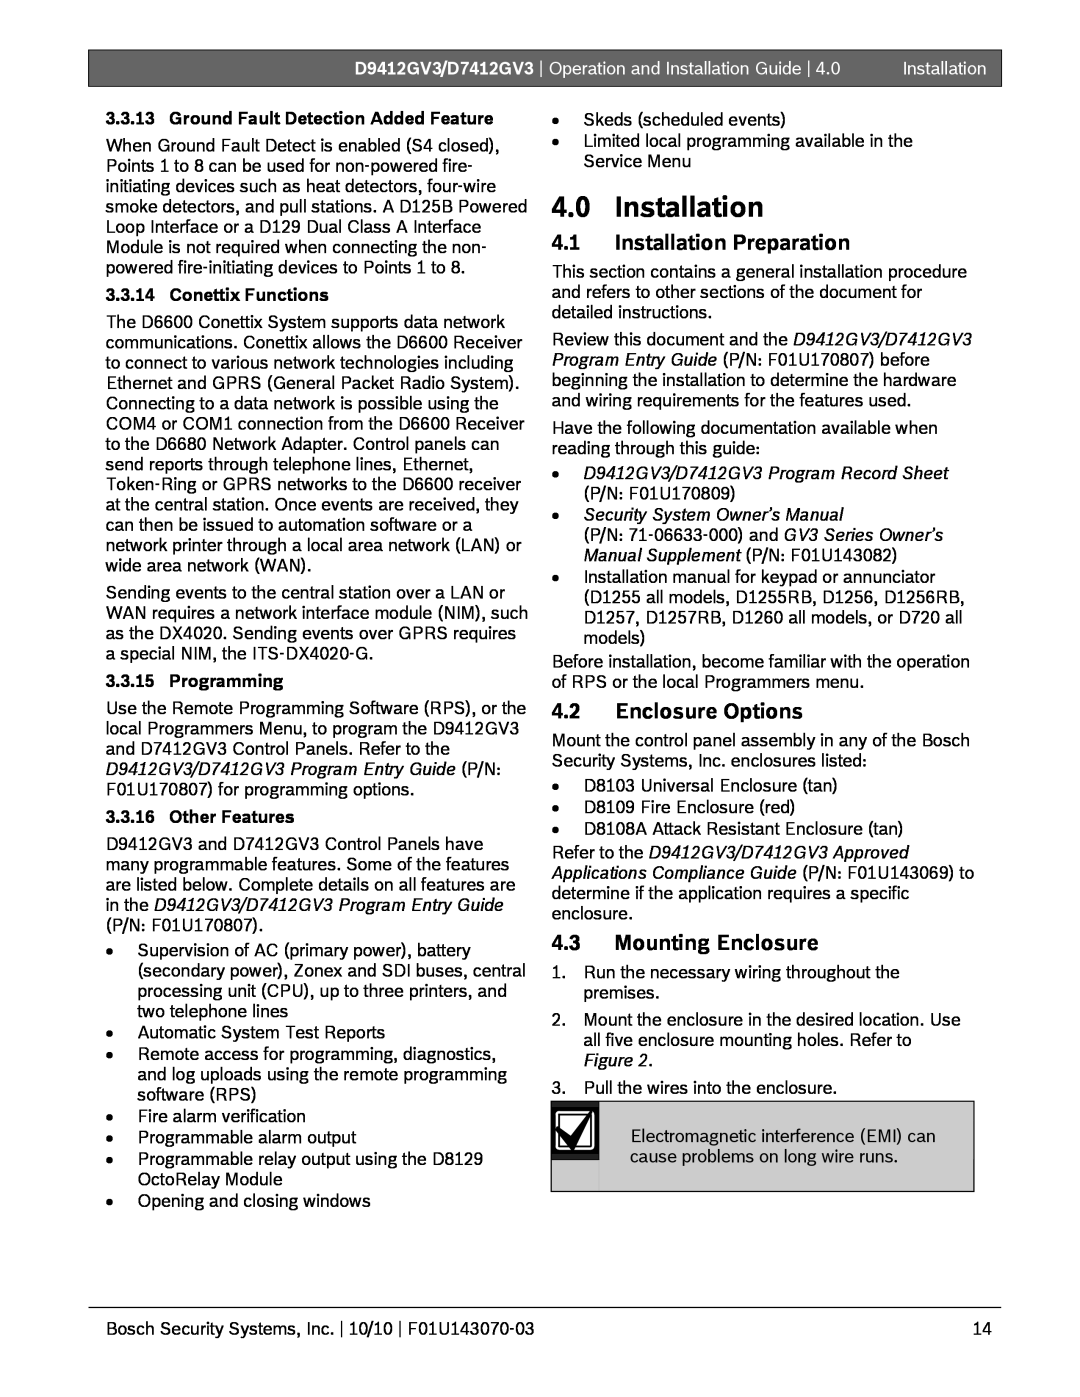 Bosch Appliances D9412GV3 manual 4.0Installation, 4.1Installation Preparation, 4.2Enclosure Options, 4.3Mounting Enclosure 